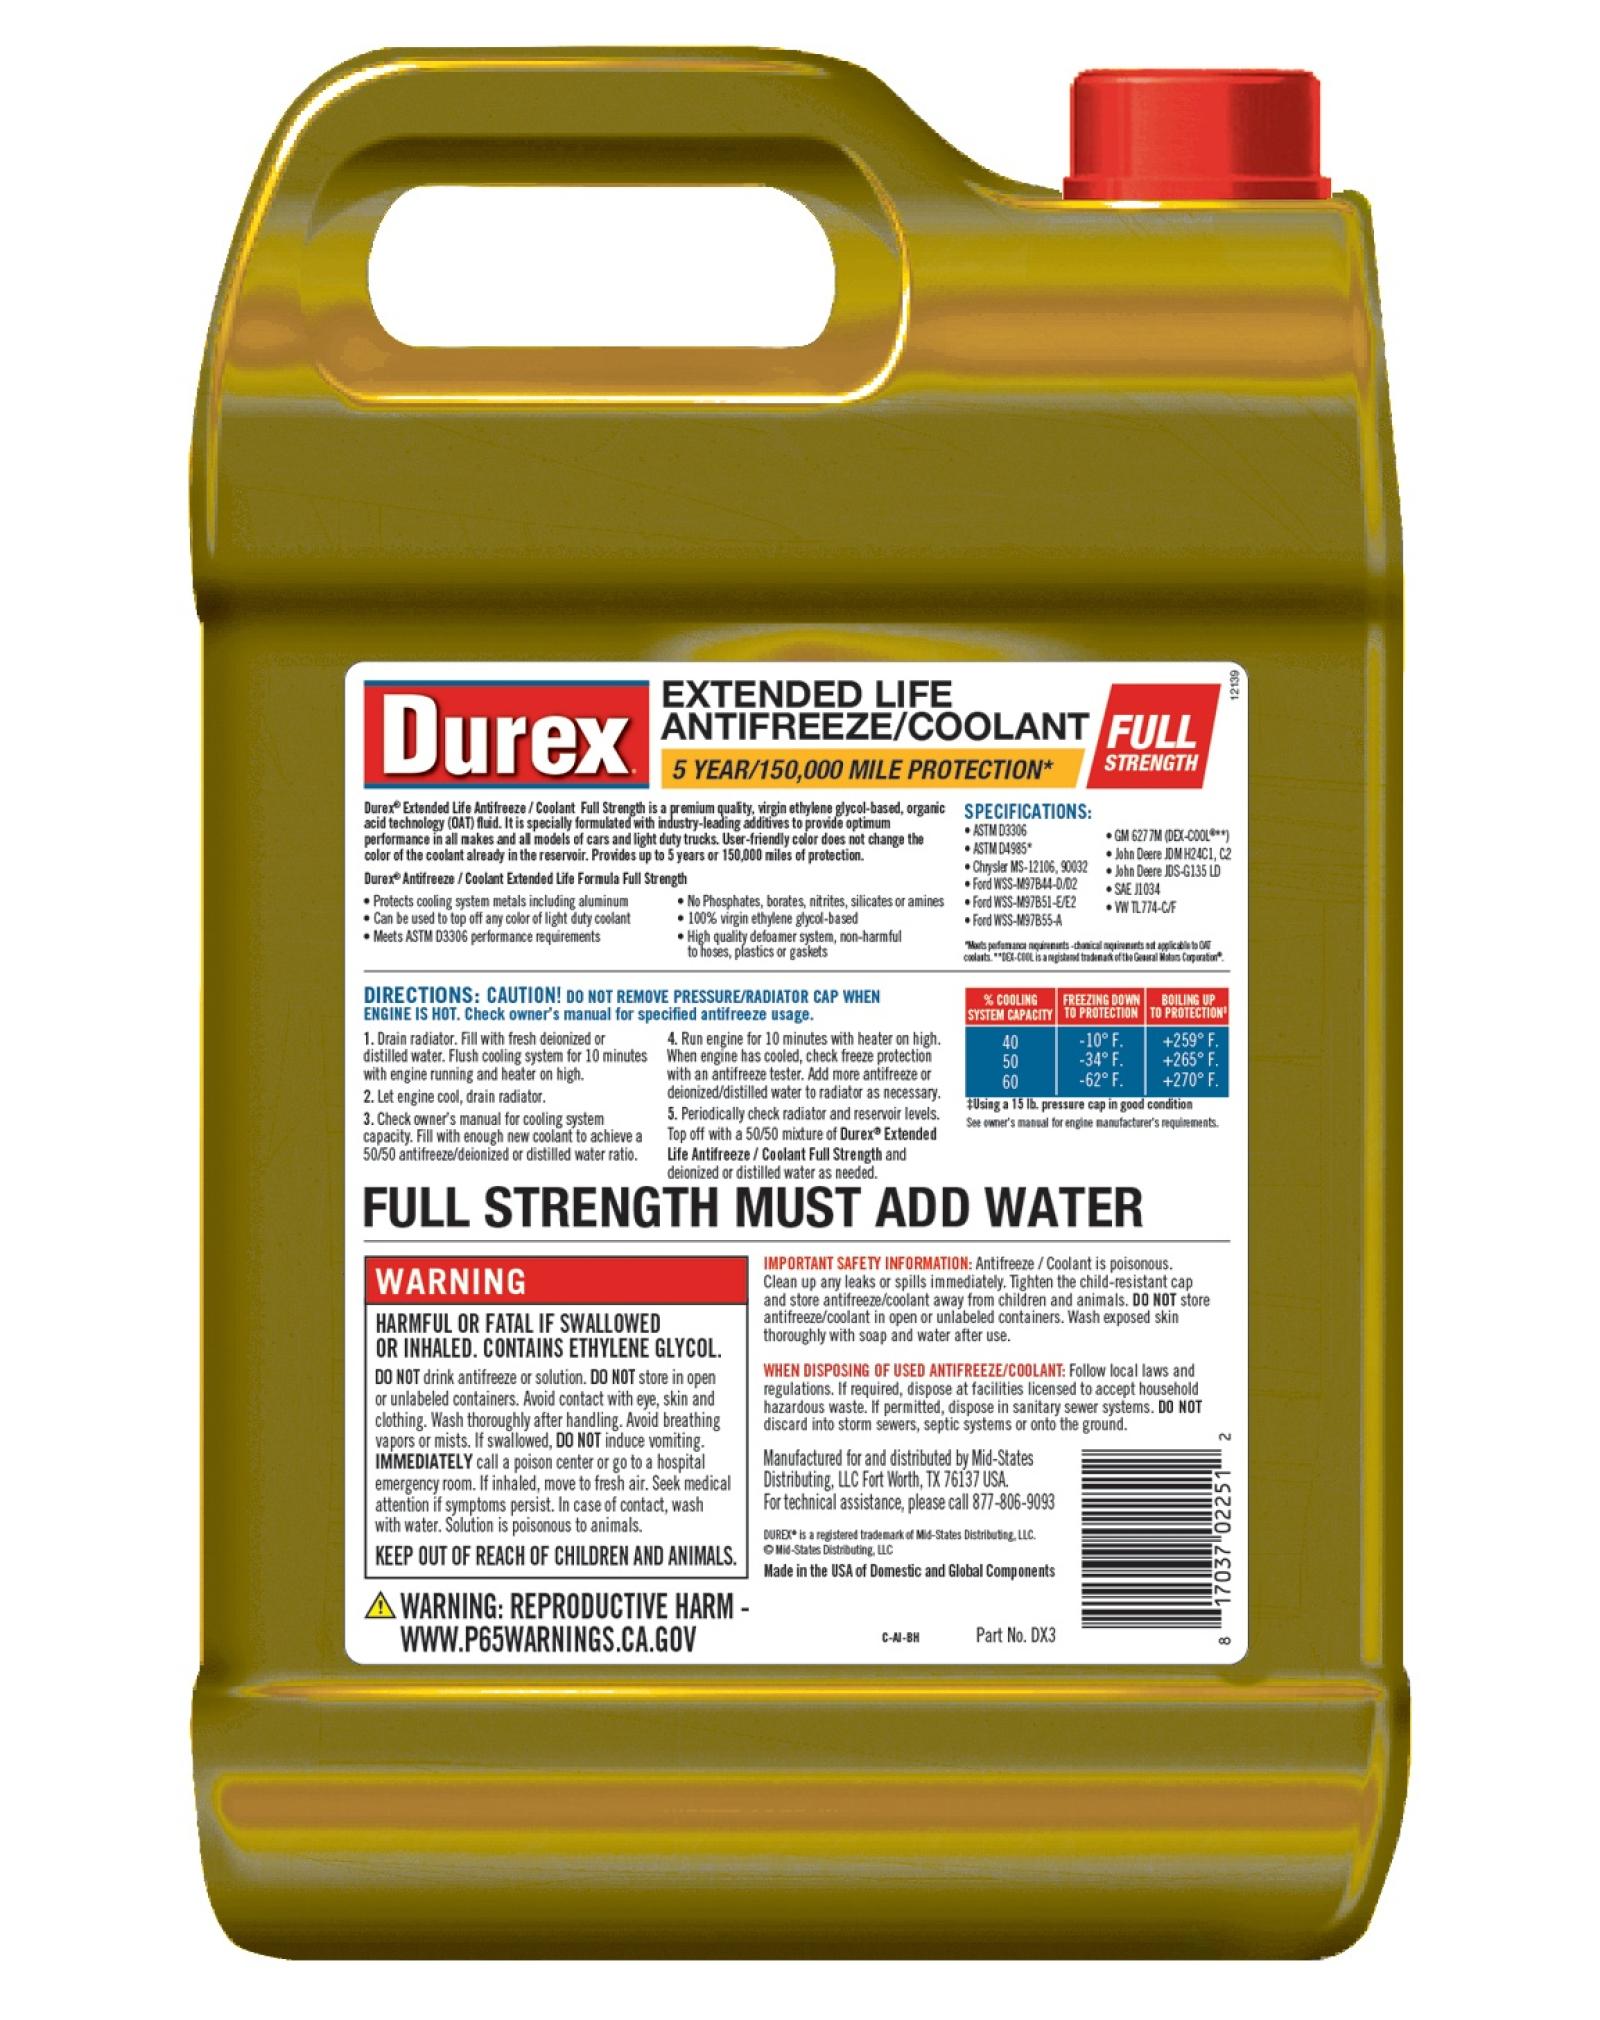 Durex® Extended Life Formula Antifreeze/Coolant